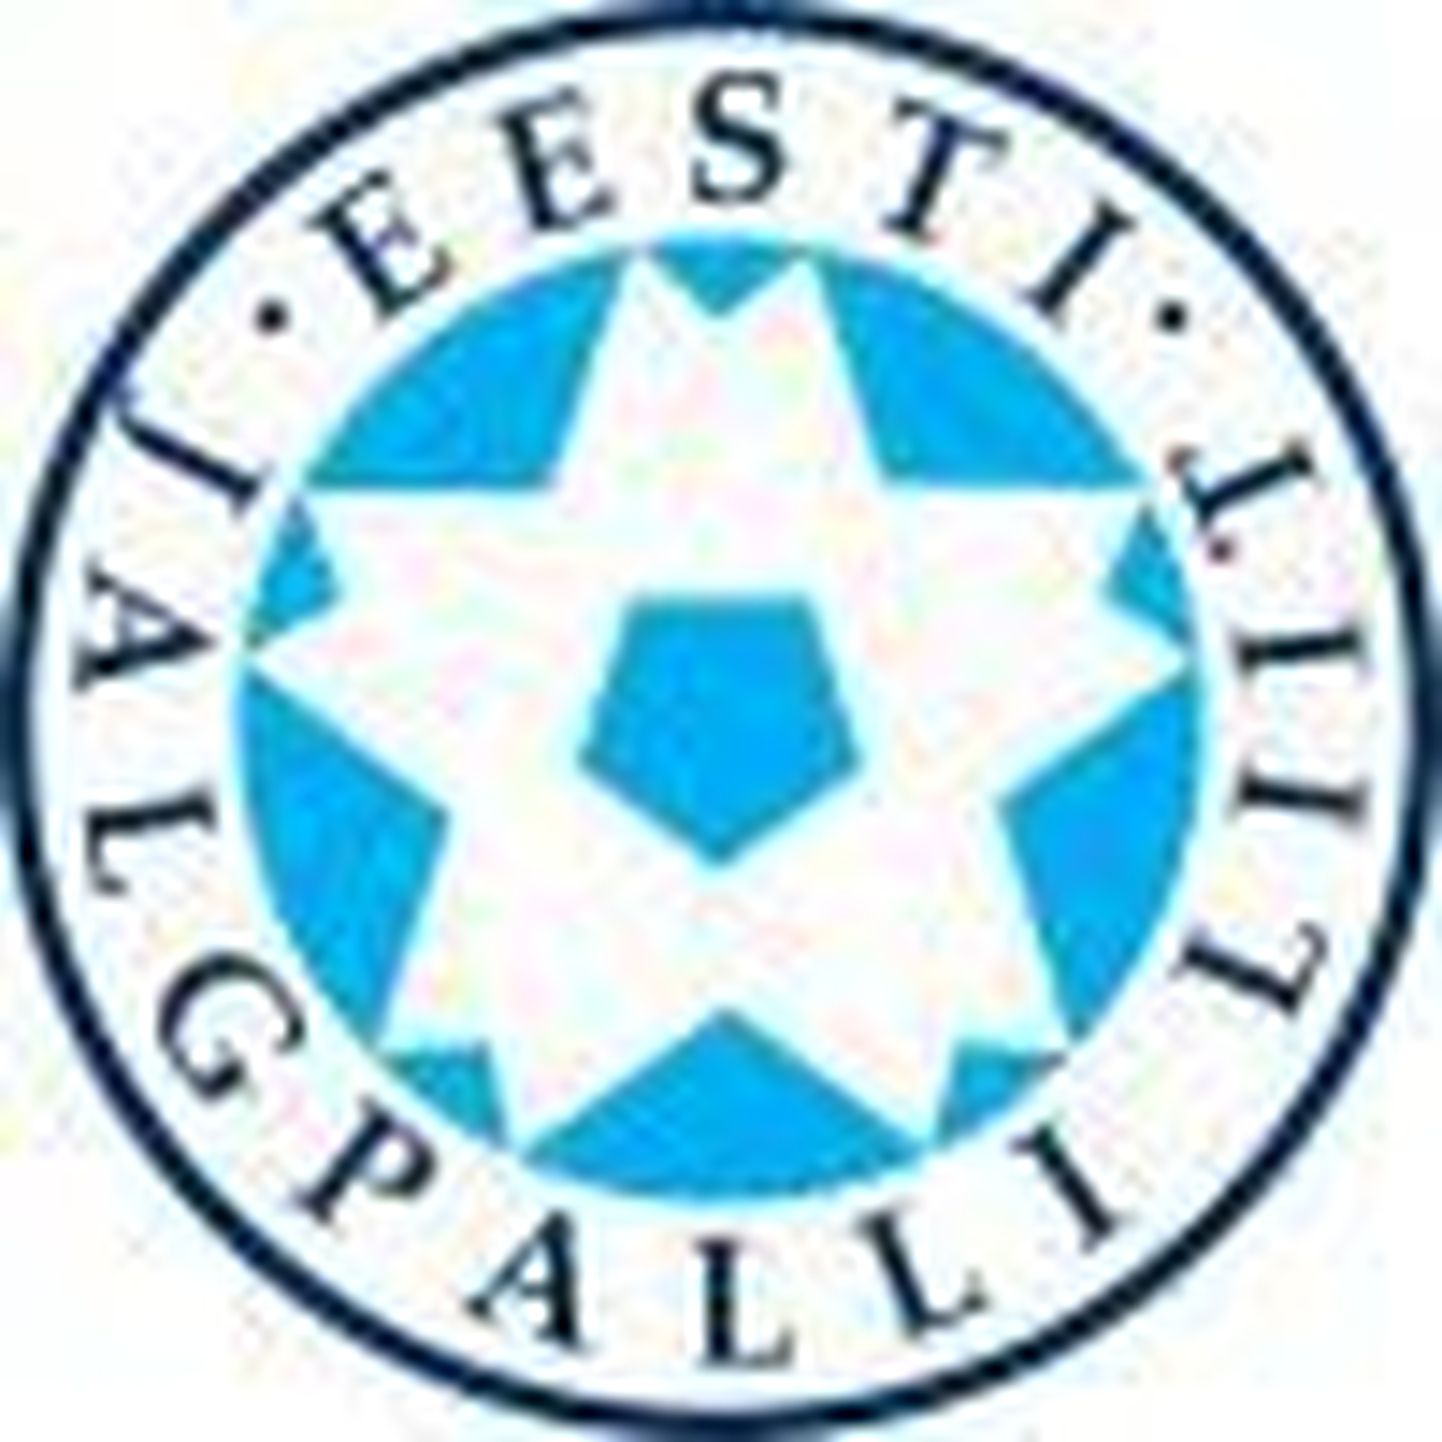 Eesti jalgpalliliidu logo.